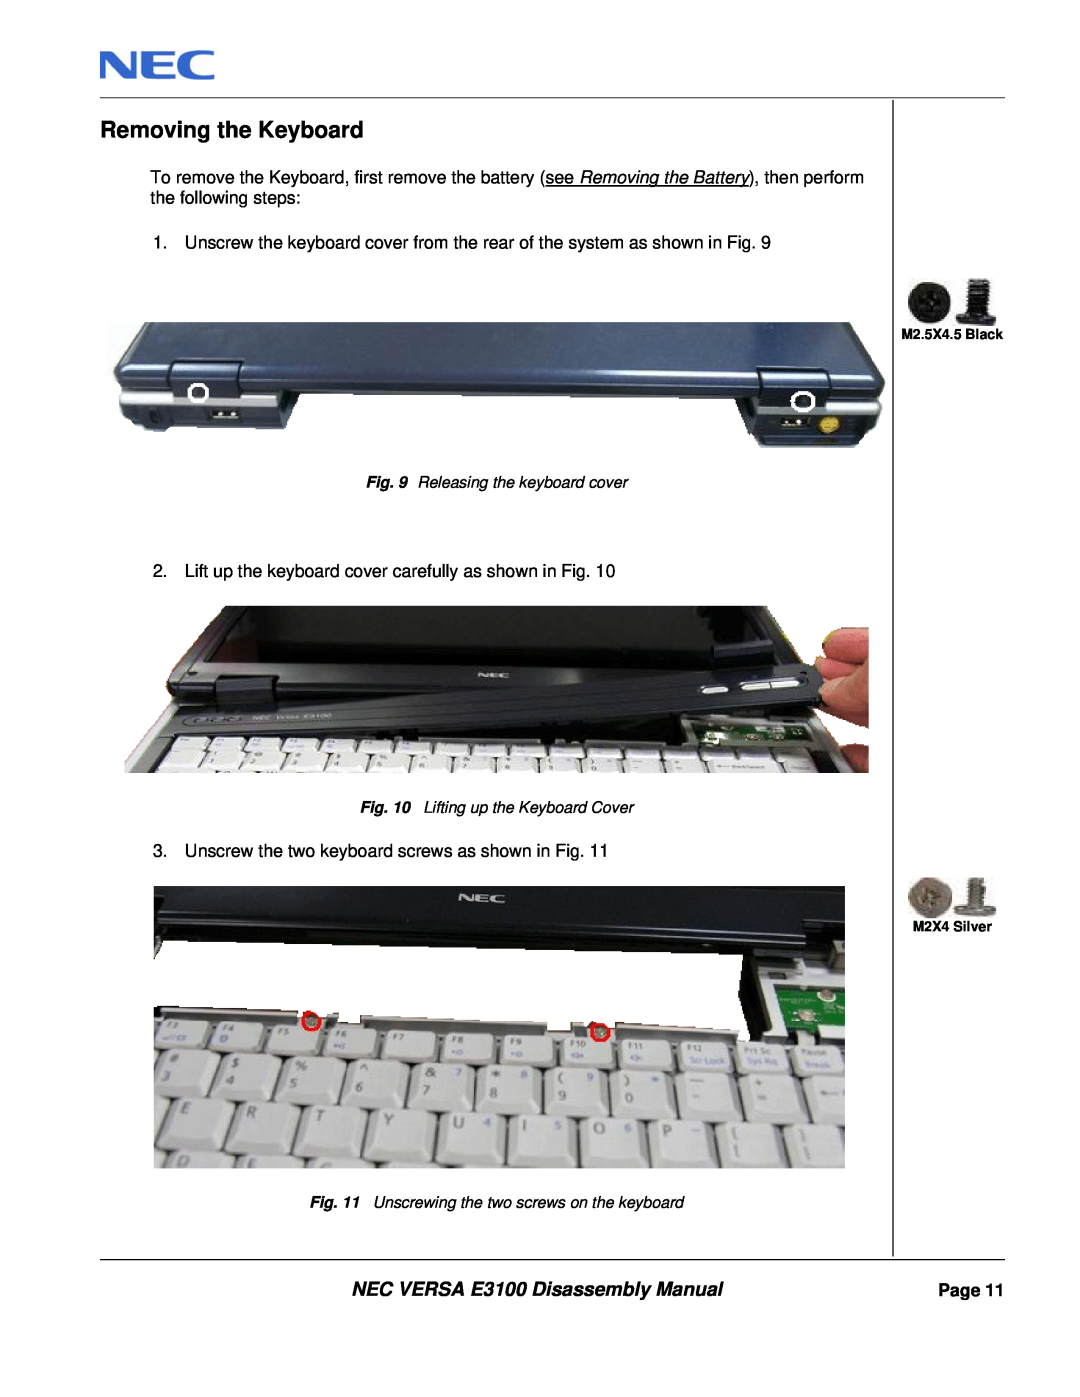 NEC manual Removing the Keyboard, NEC VERSA E3100 Disassembly Manual, Releasing the keyboard cover 